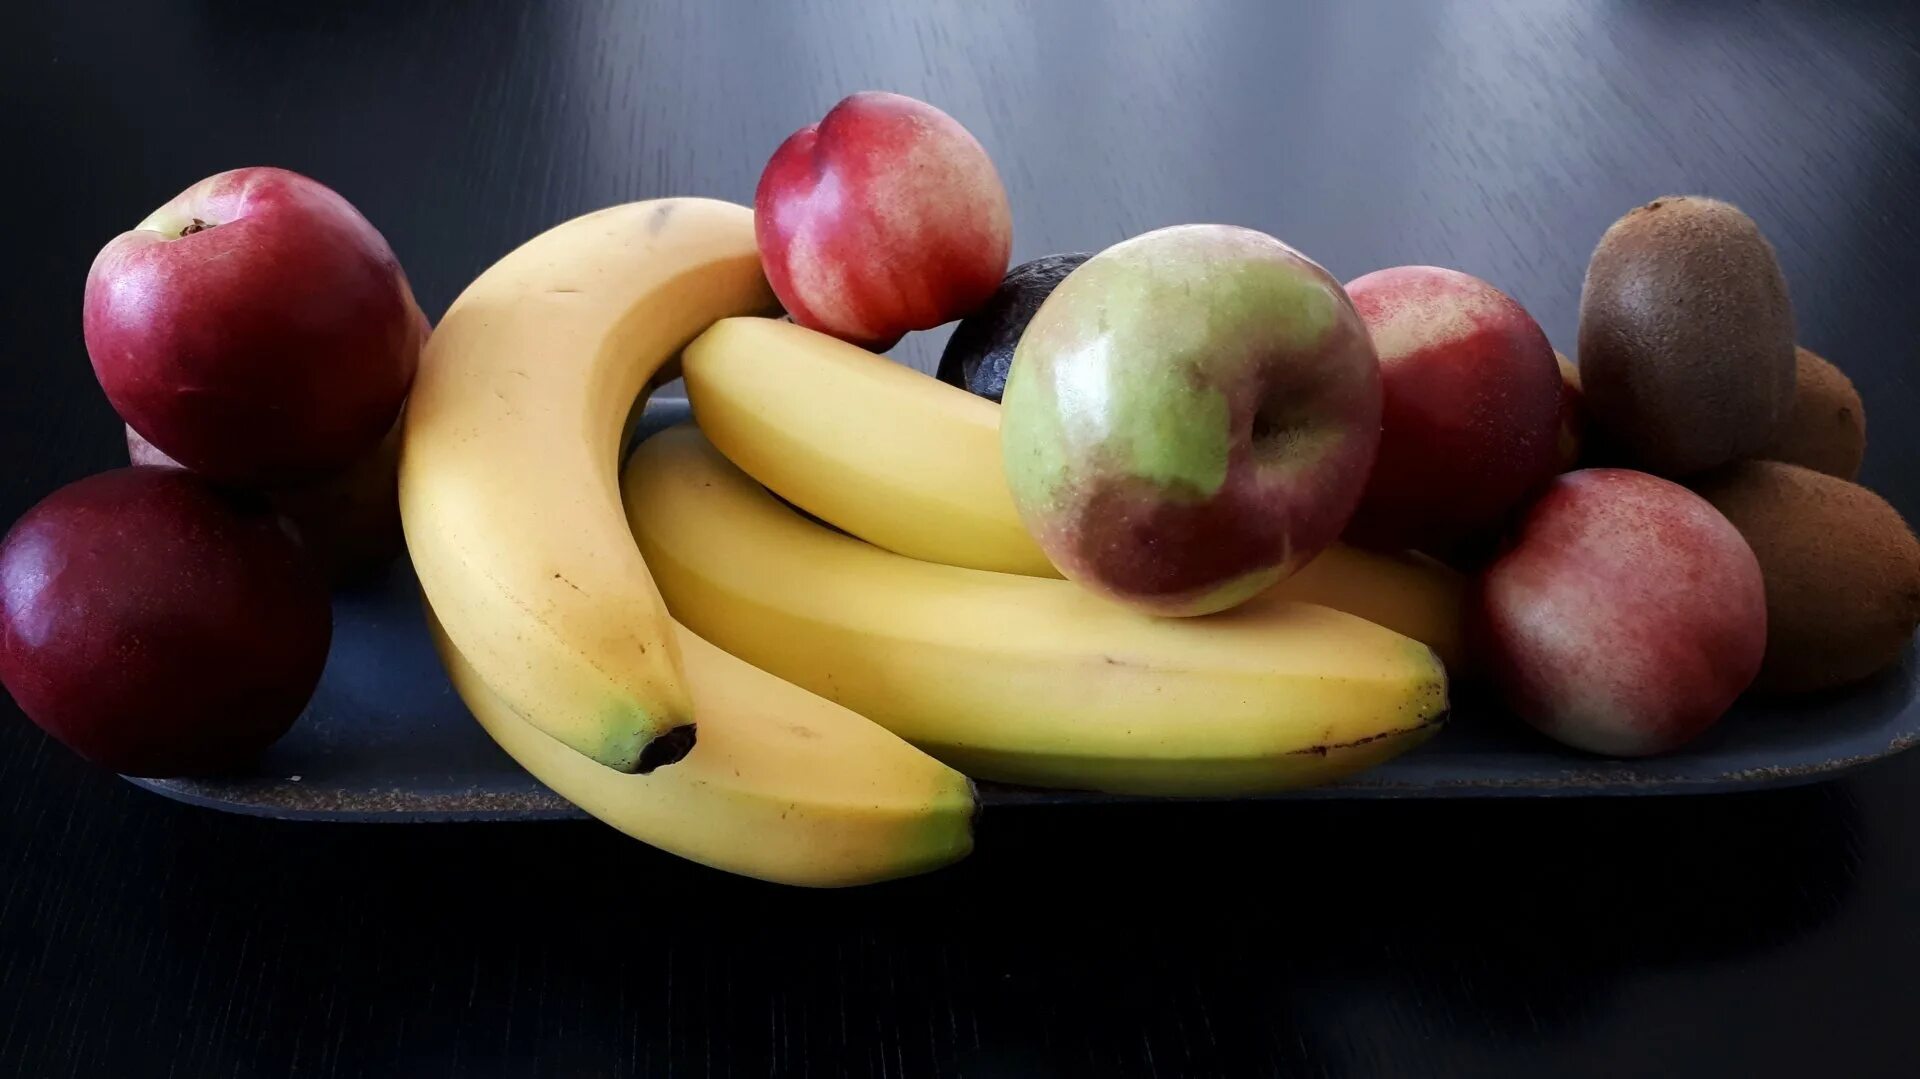 I like bananas apples. Фрукты бананы яблоки. Яблочные бананы. Яблоко и банан Эстетика. Яблоко и банан фото.